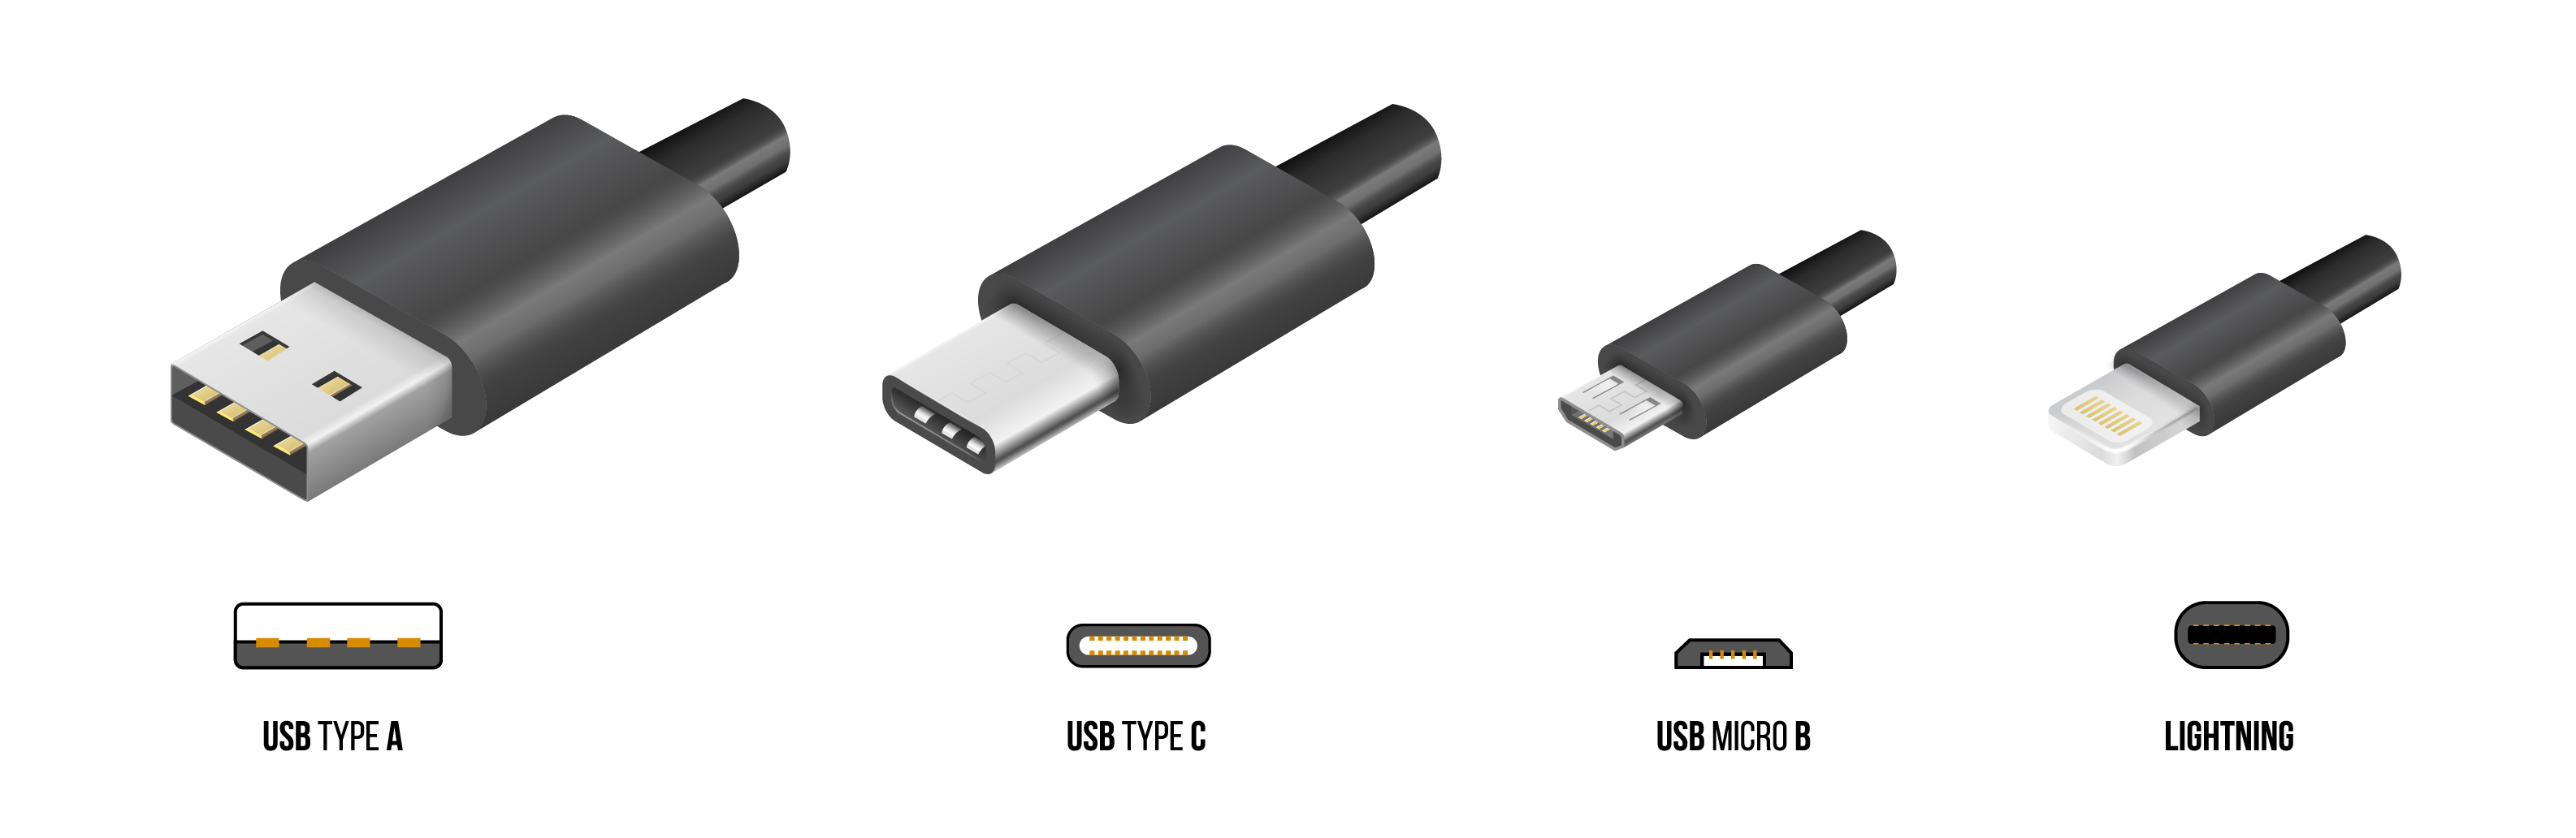 USB Type-A, USB Type-C, Micro USB Type-B and Lighting